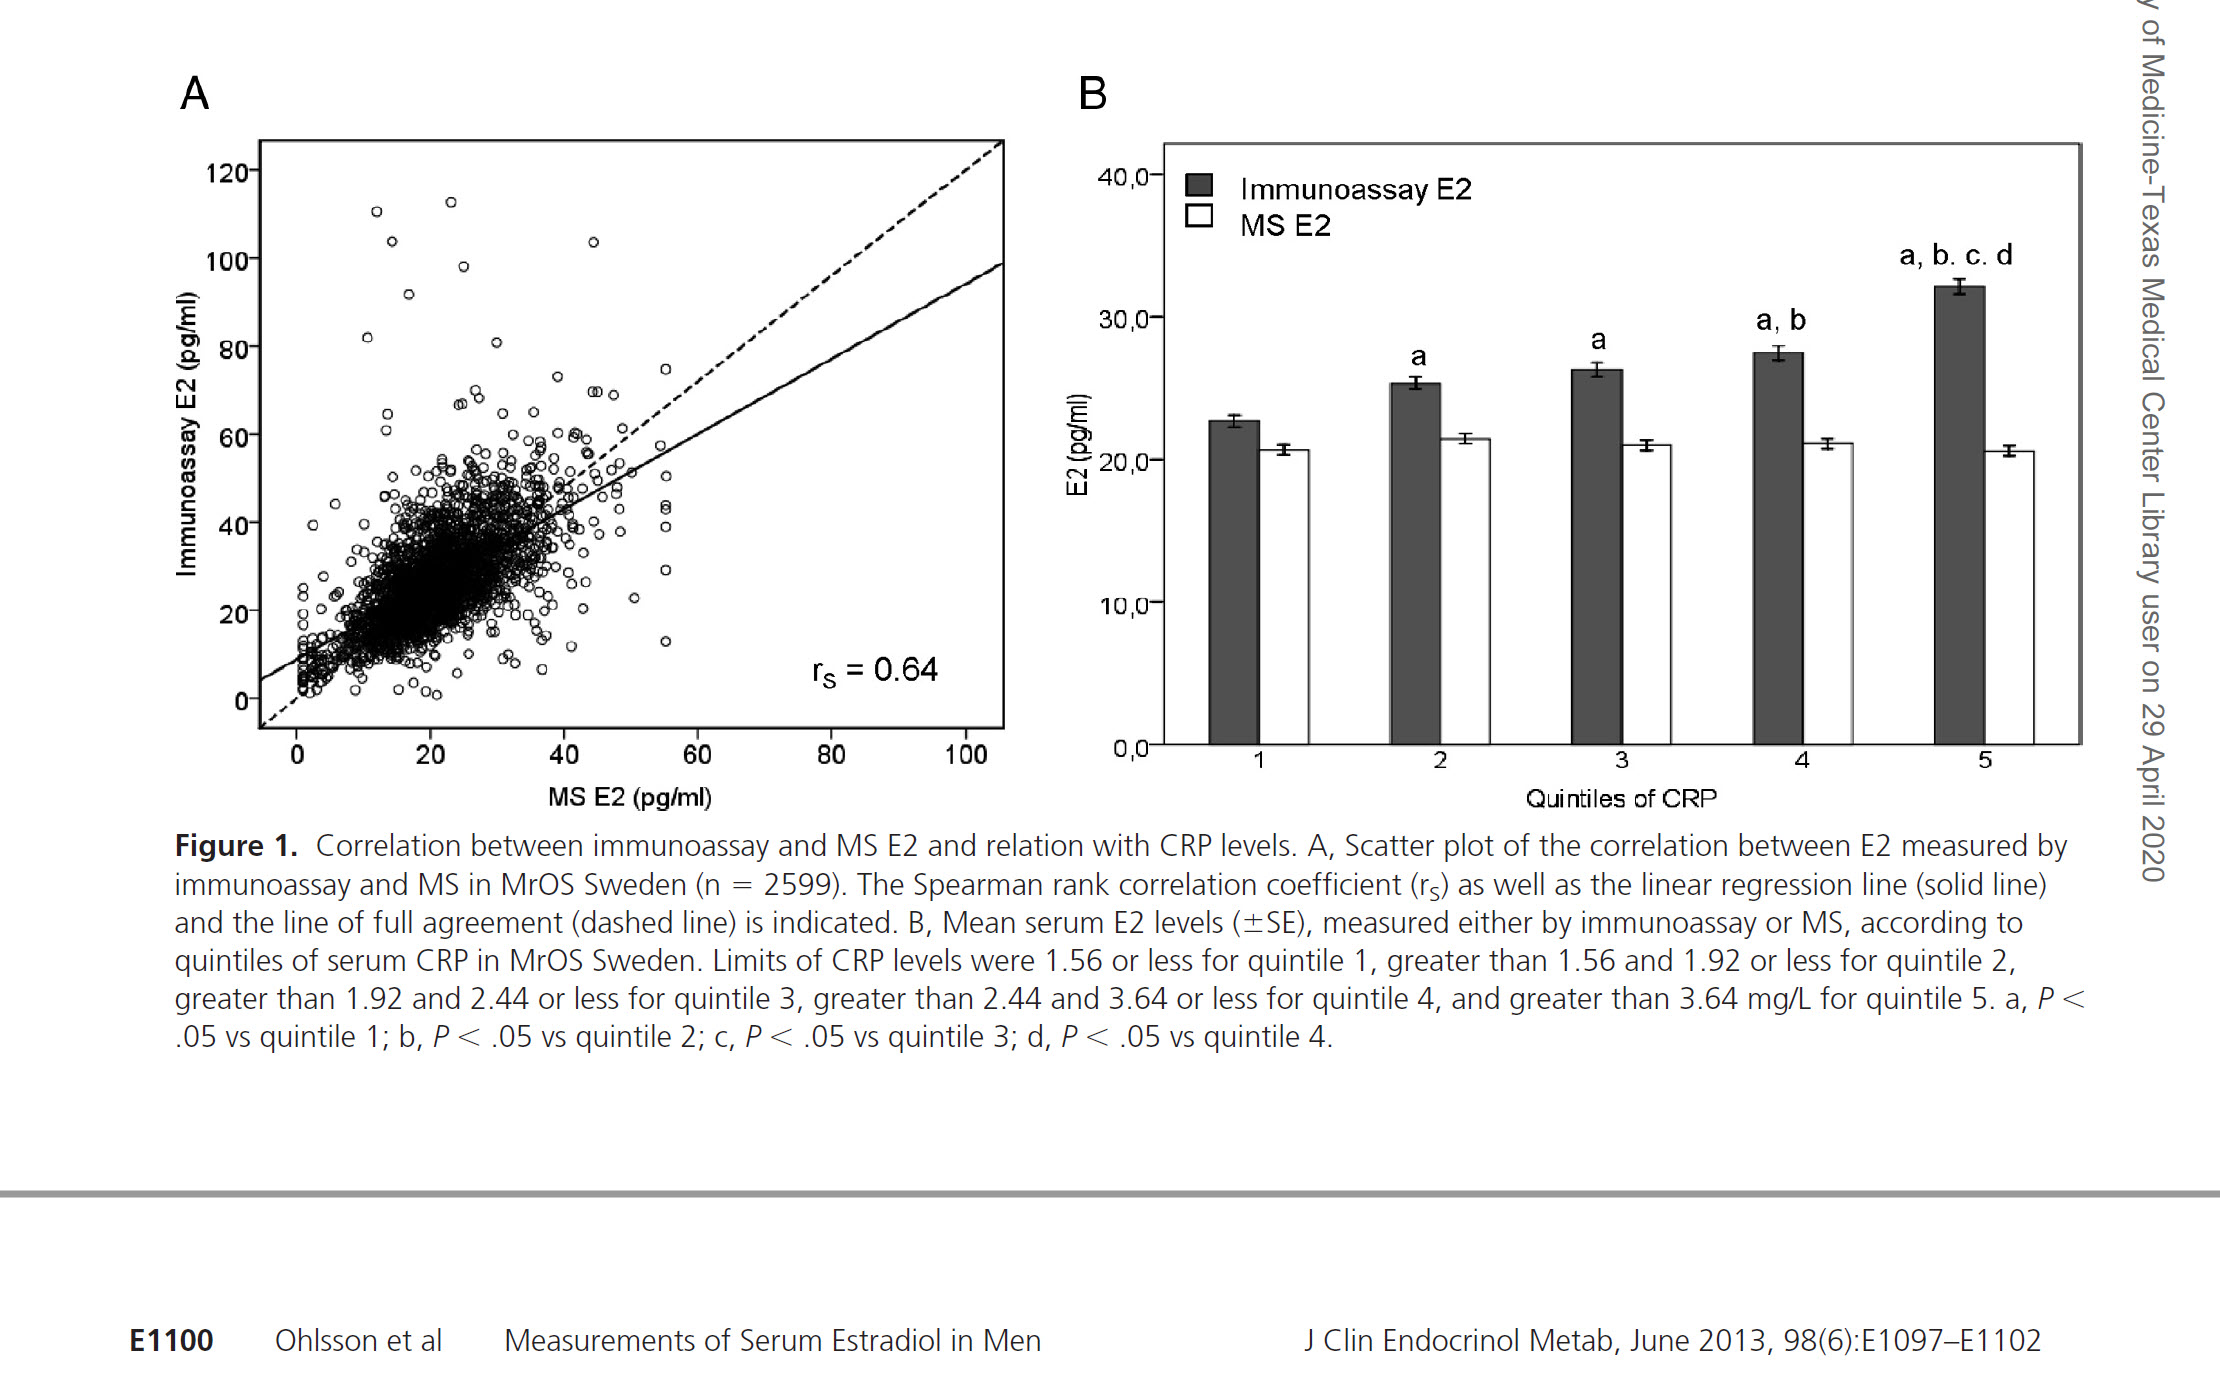 immunoassay estradiol versus sensitive estradiol test in men.jpg